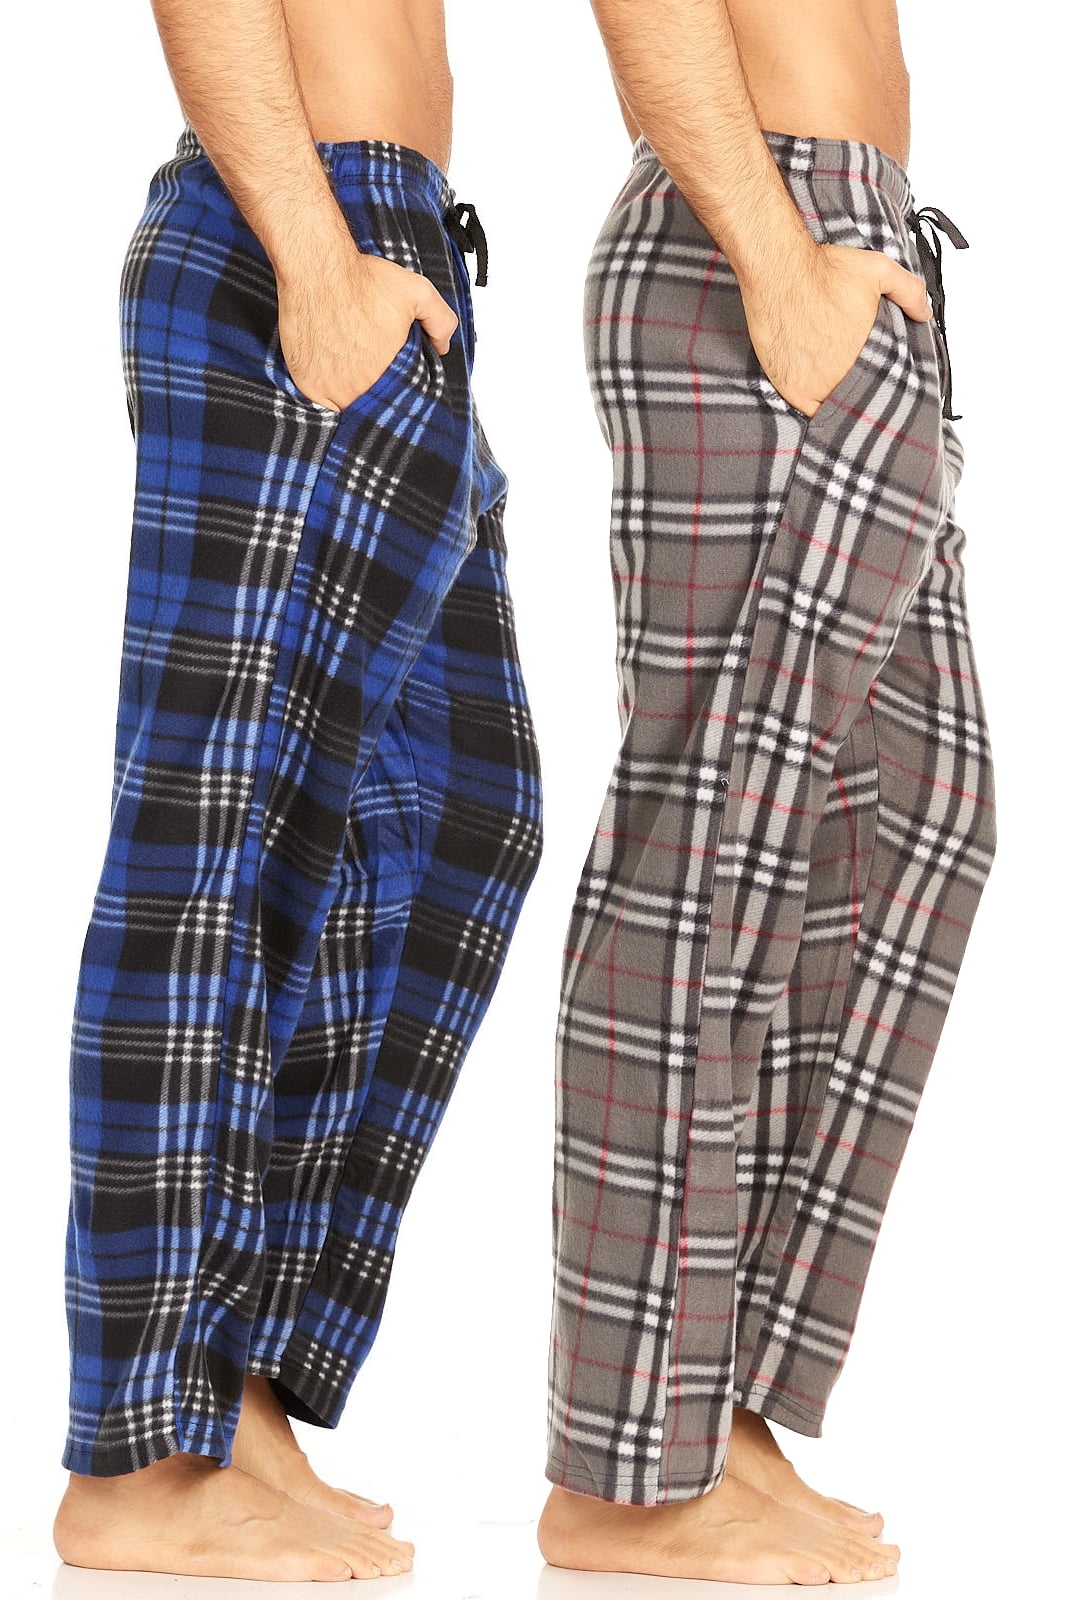 DARESAY Men's Microfleece Pajama Pants/Lounge Wear Pockets, 2-Pack ...